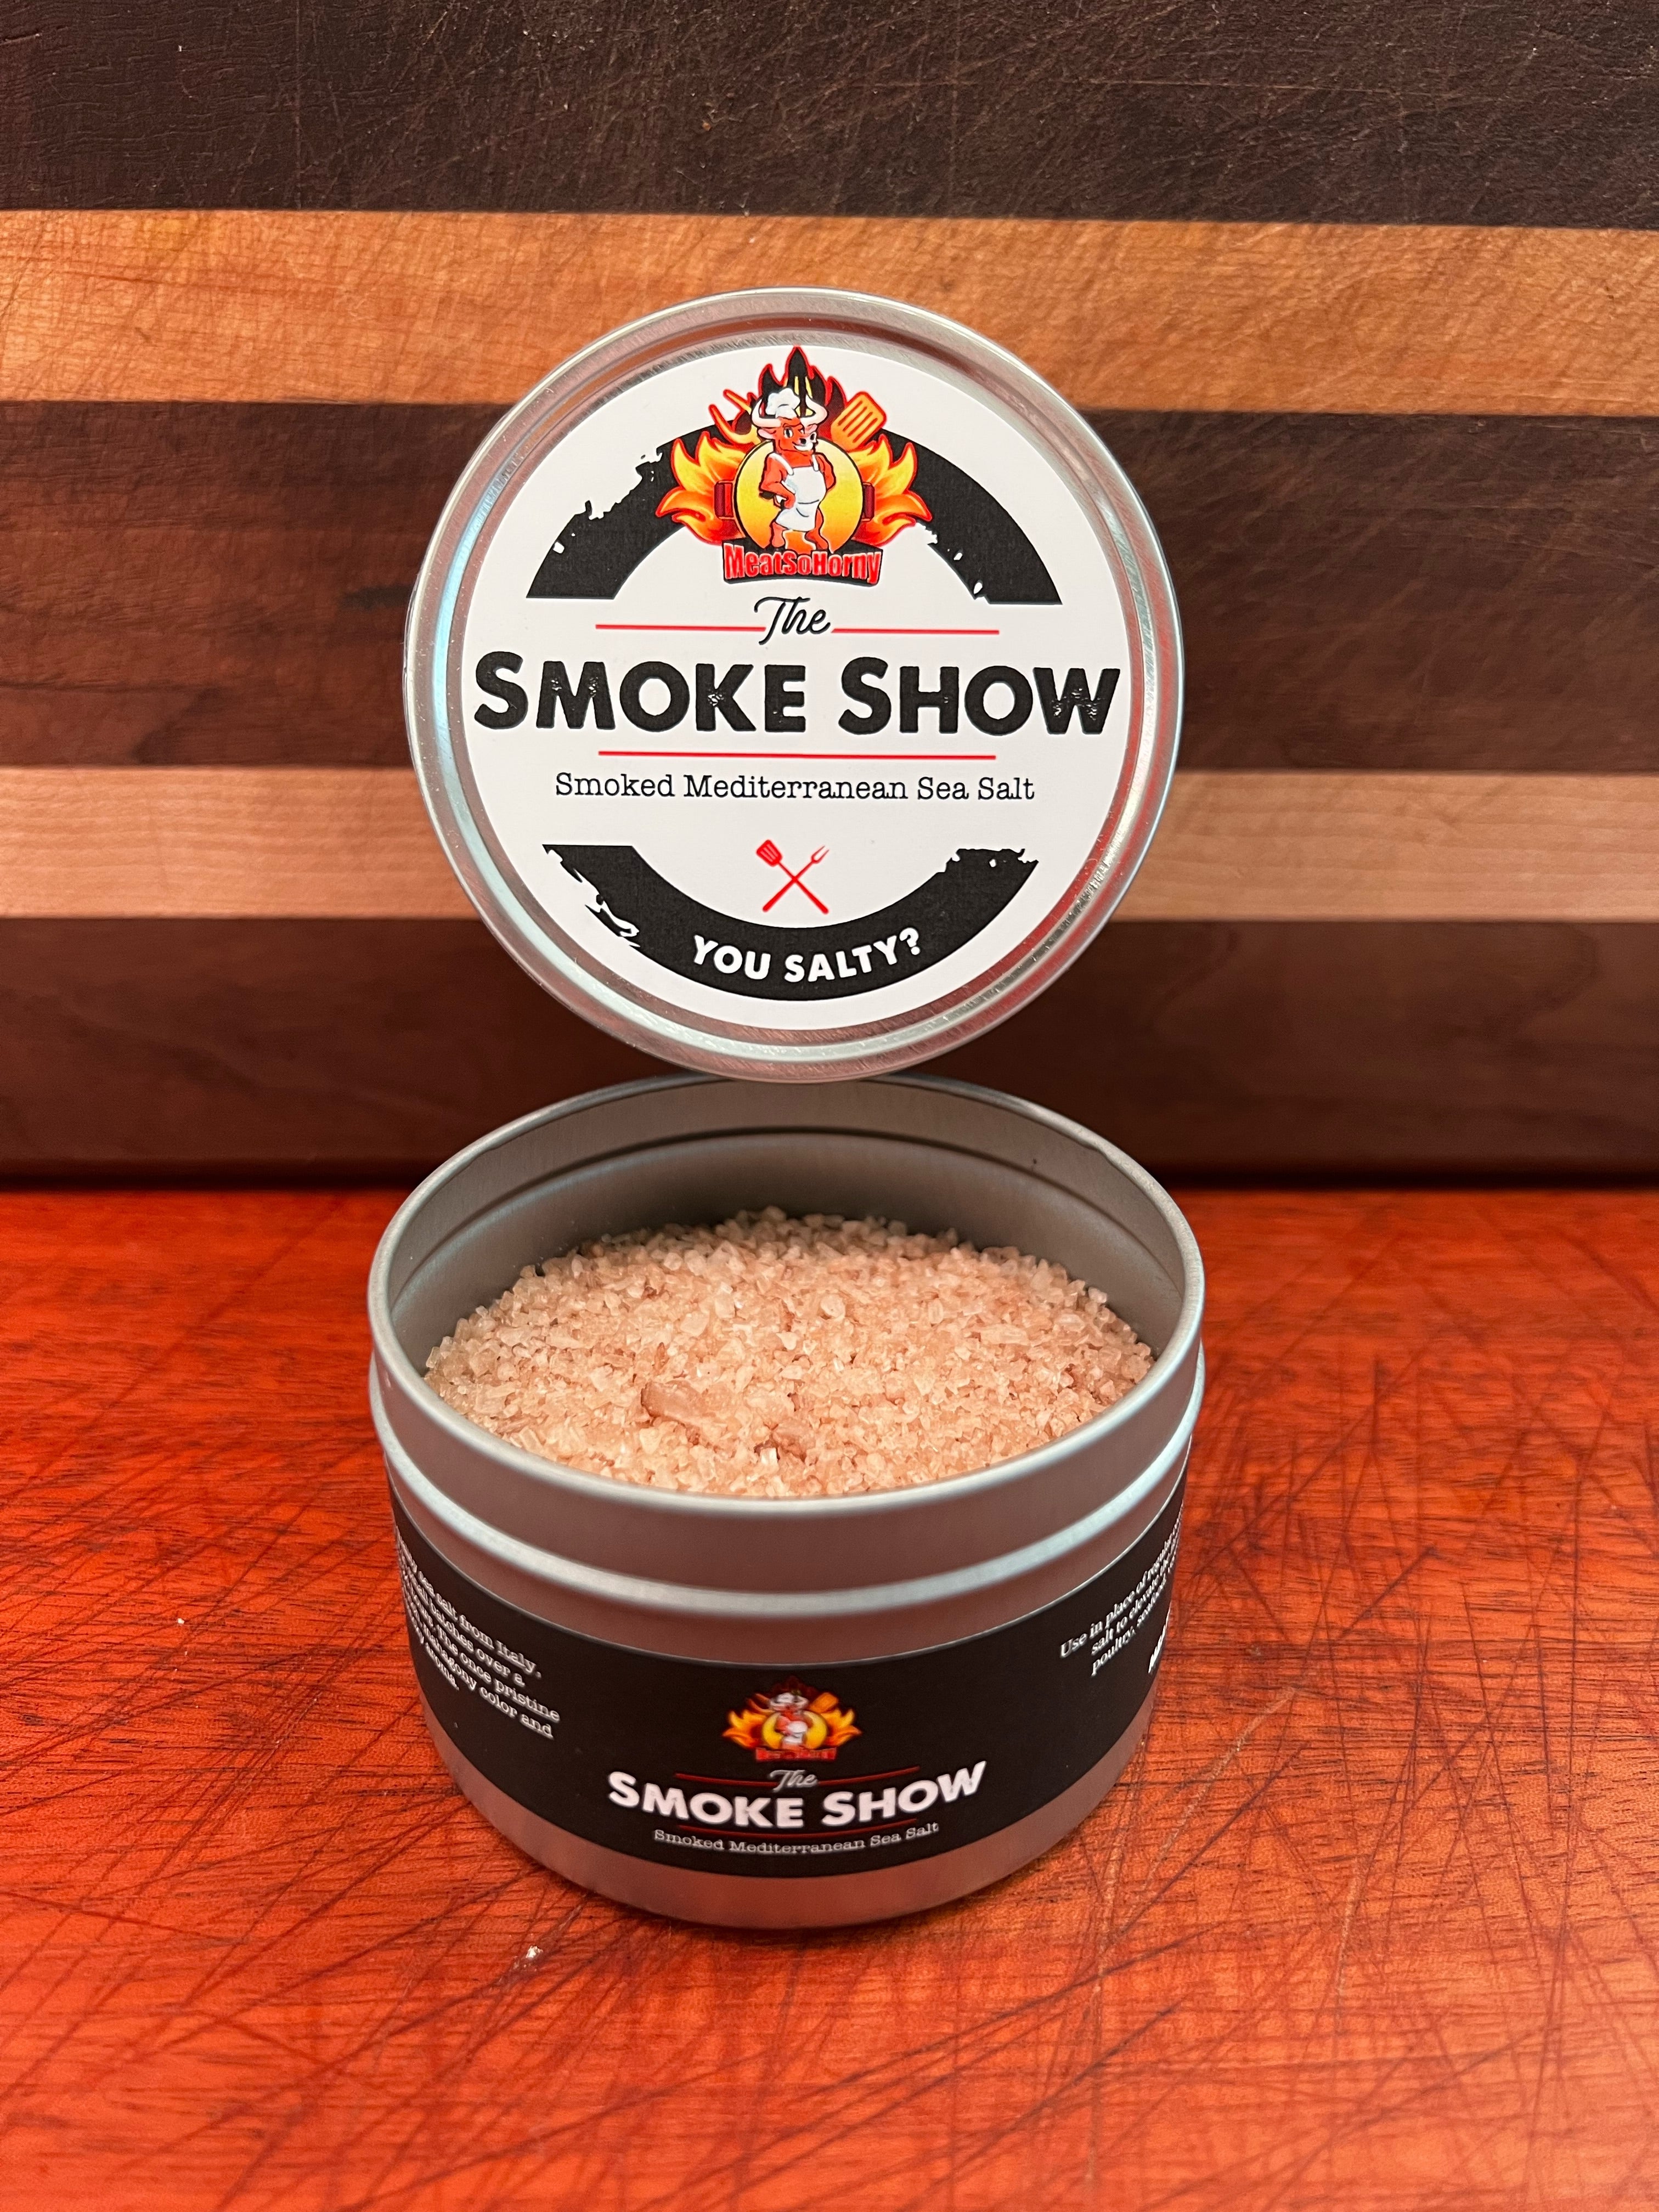 The Smoke Show - Mediterranean Sea Salt